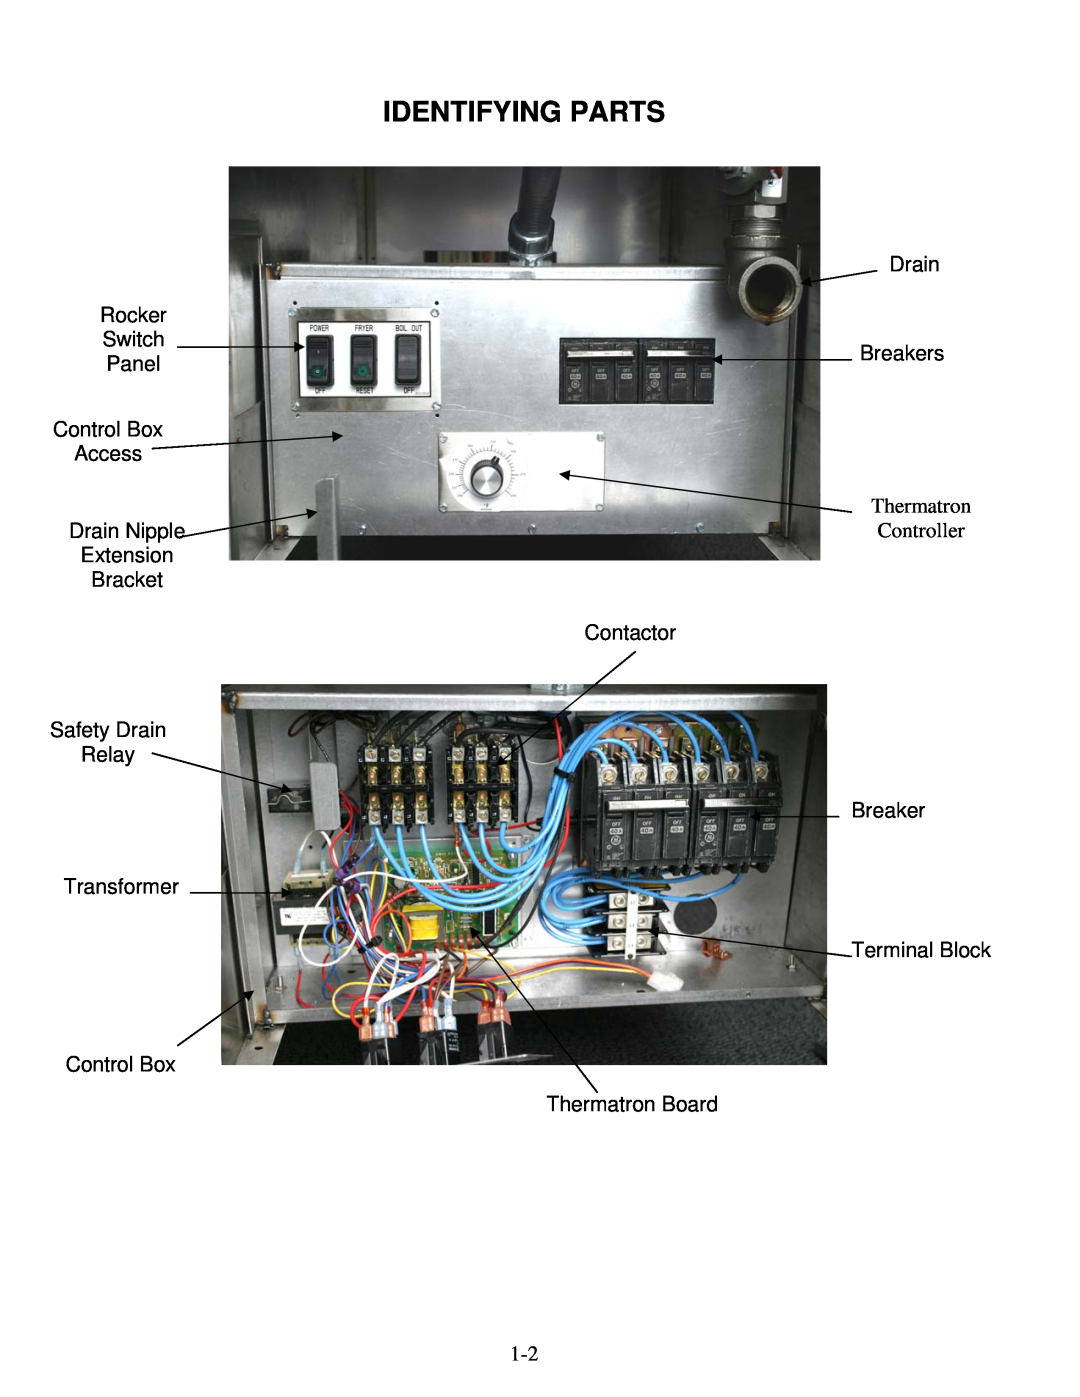 Frymaster 1824E manual Identifying Parts, Rocker Switch Panel Control Box Access, Transformer Control Box, Drain Breakers 